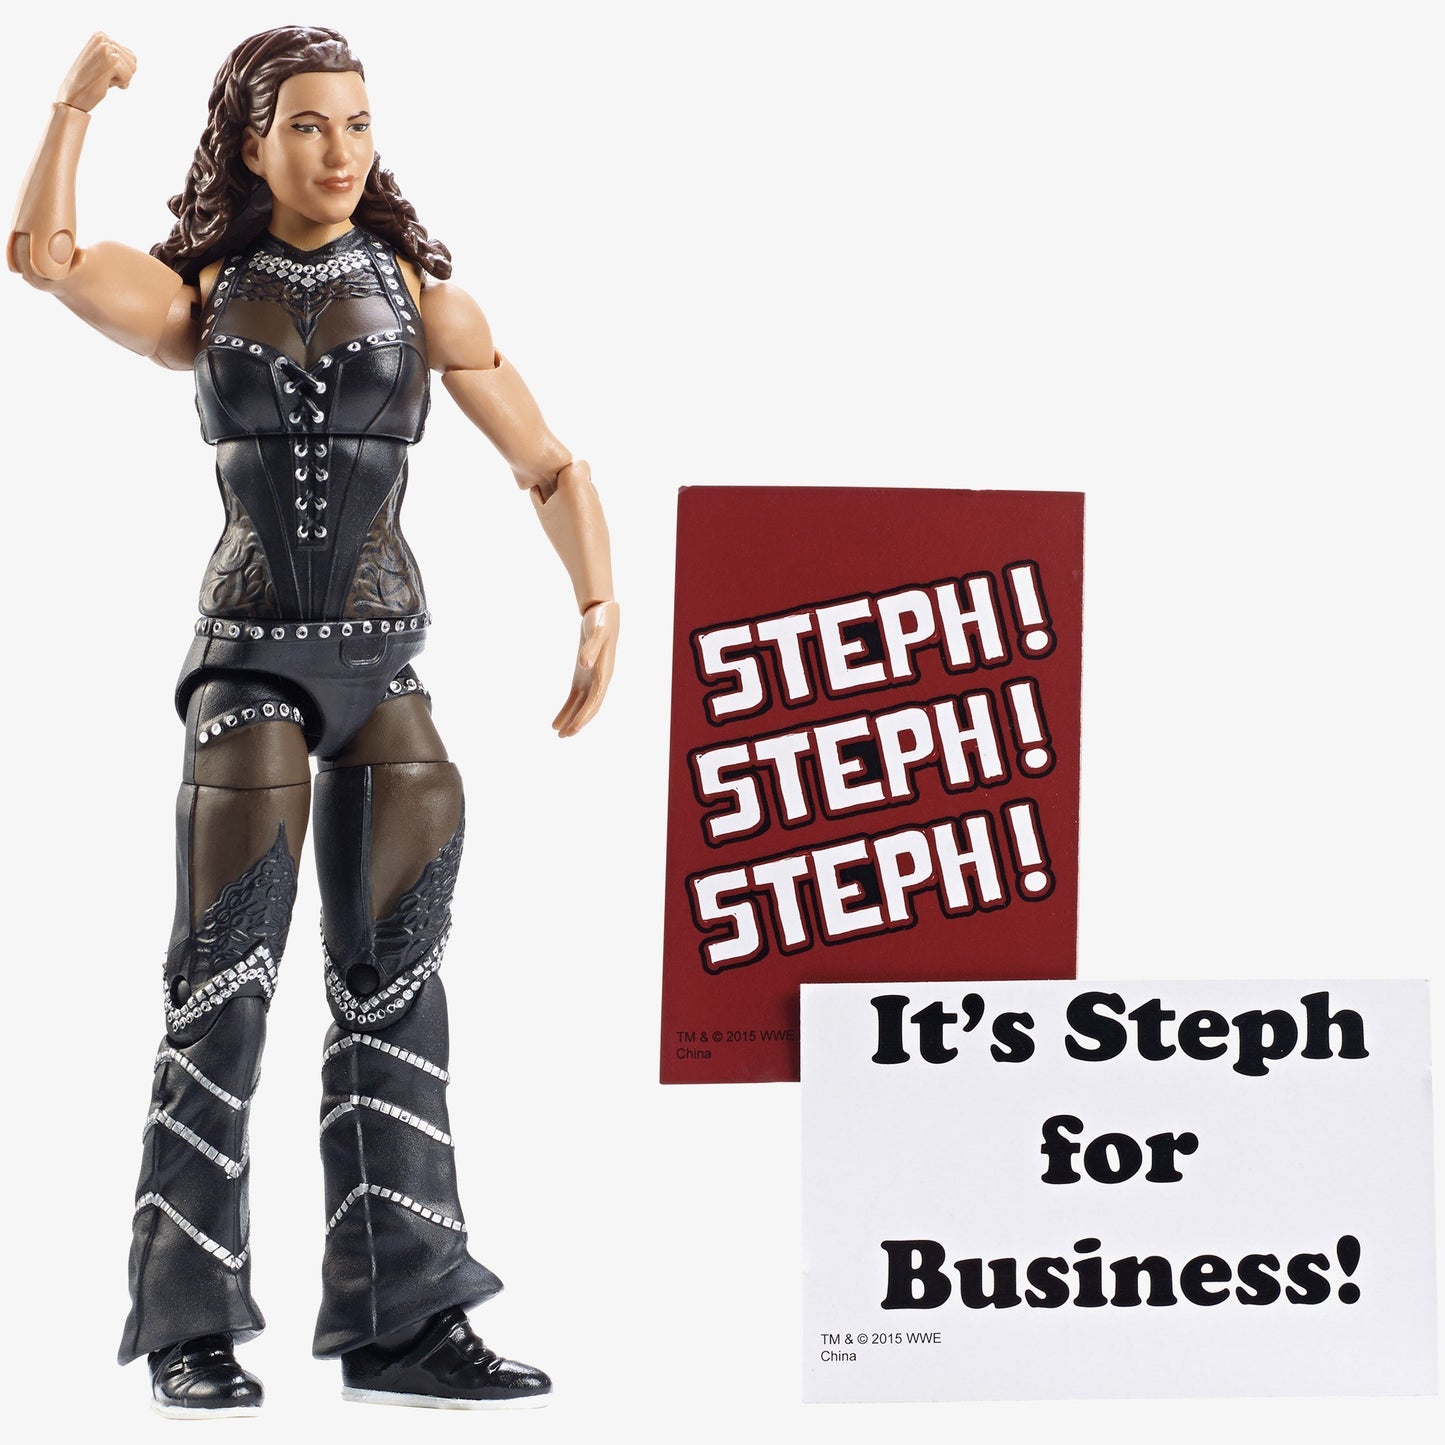 Stephanie McMahon WWE Elite Collection Series #37